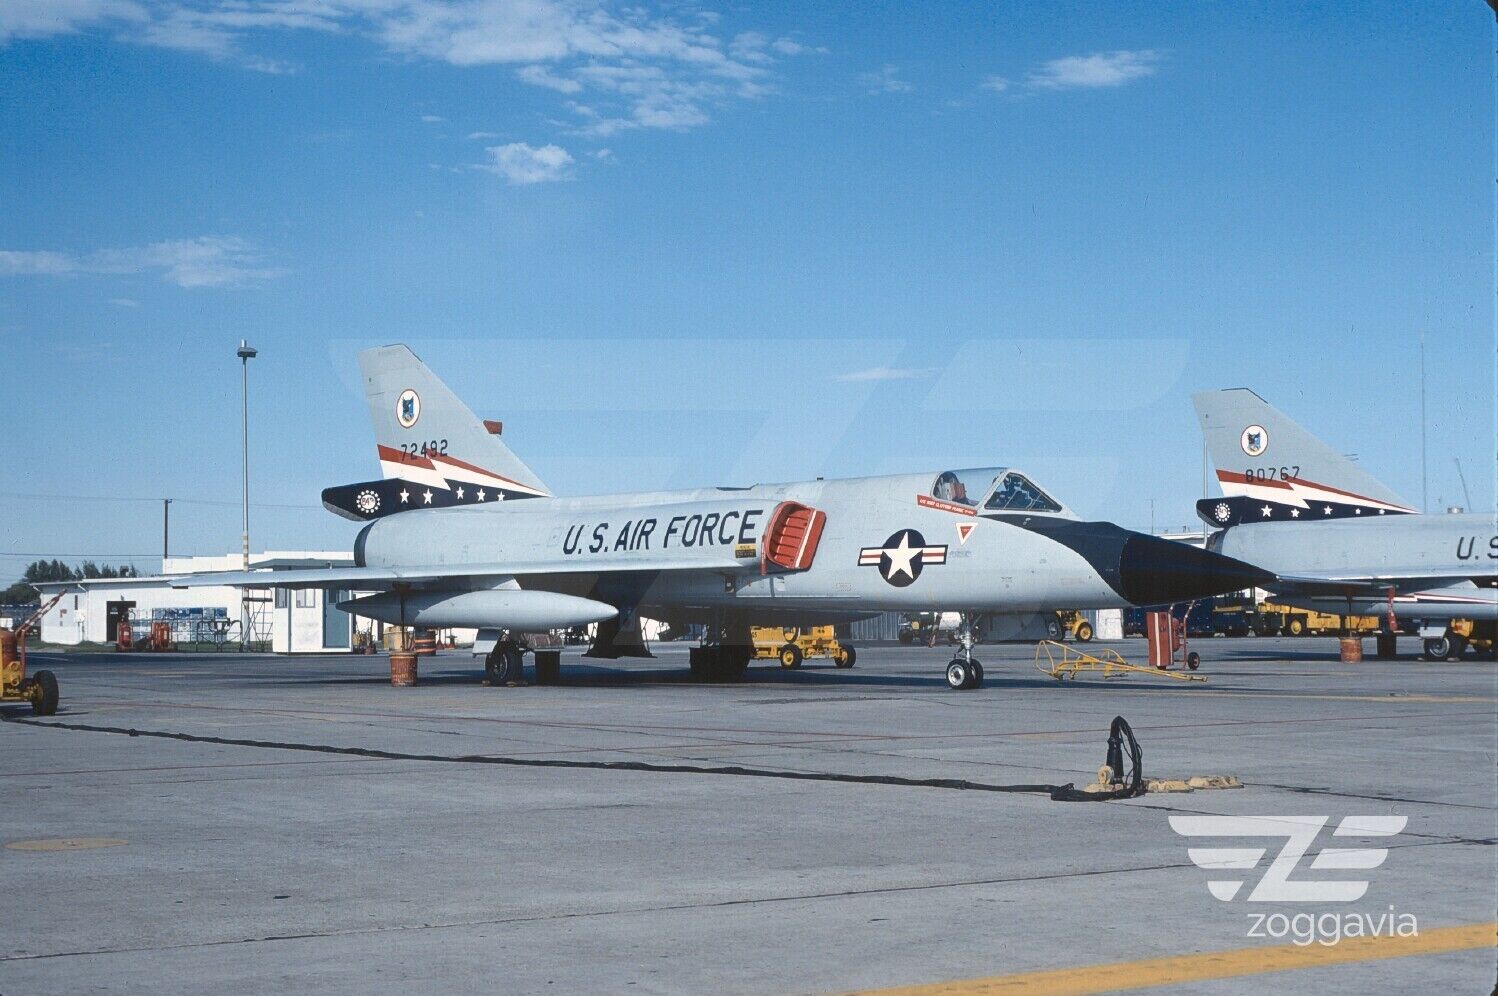 Aircraft Slide 57-2492 F-106 U.S. Air Force, USAF, 1978